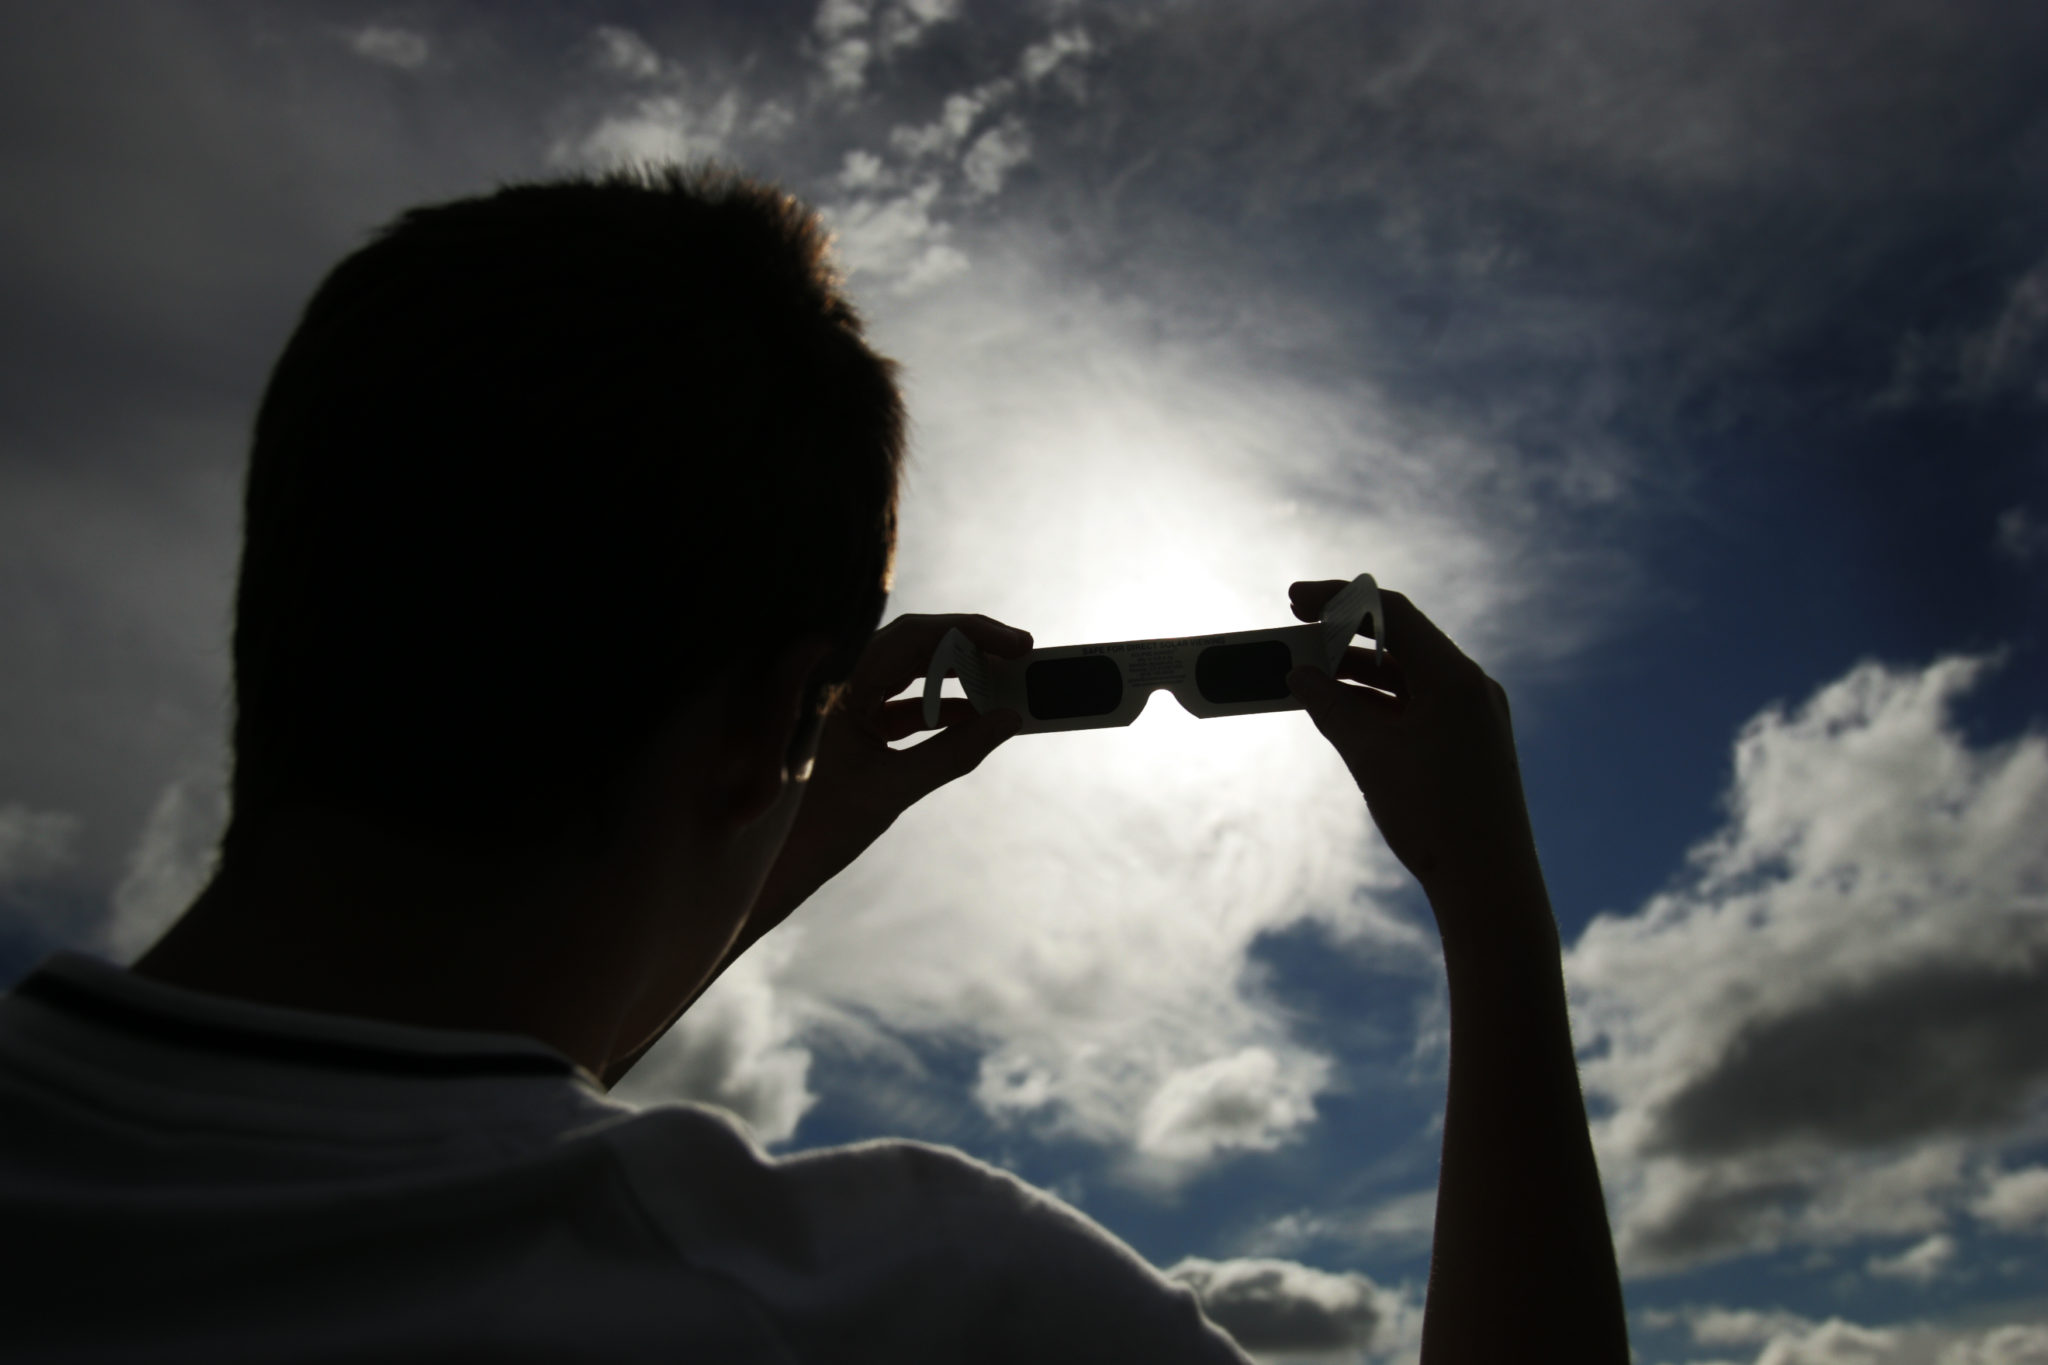 Natahan Doyle (14) puts on his Solar glasses at the Phoenix Park Dublin